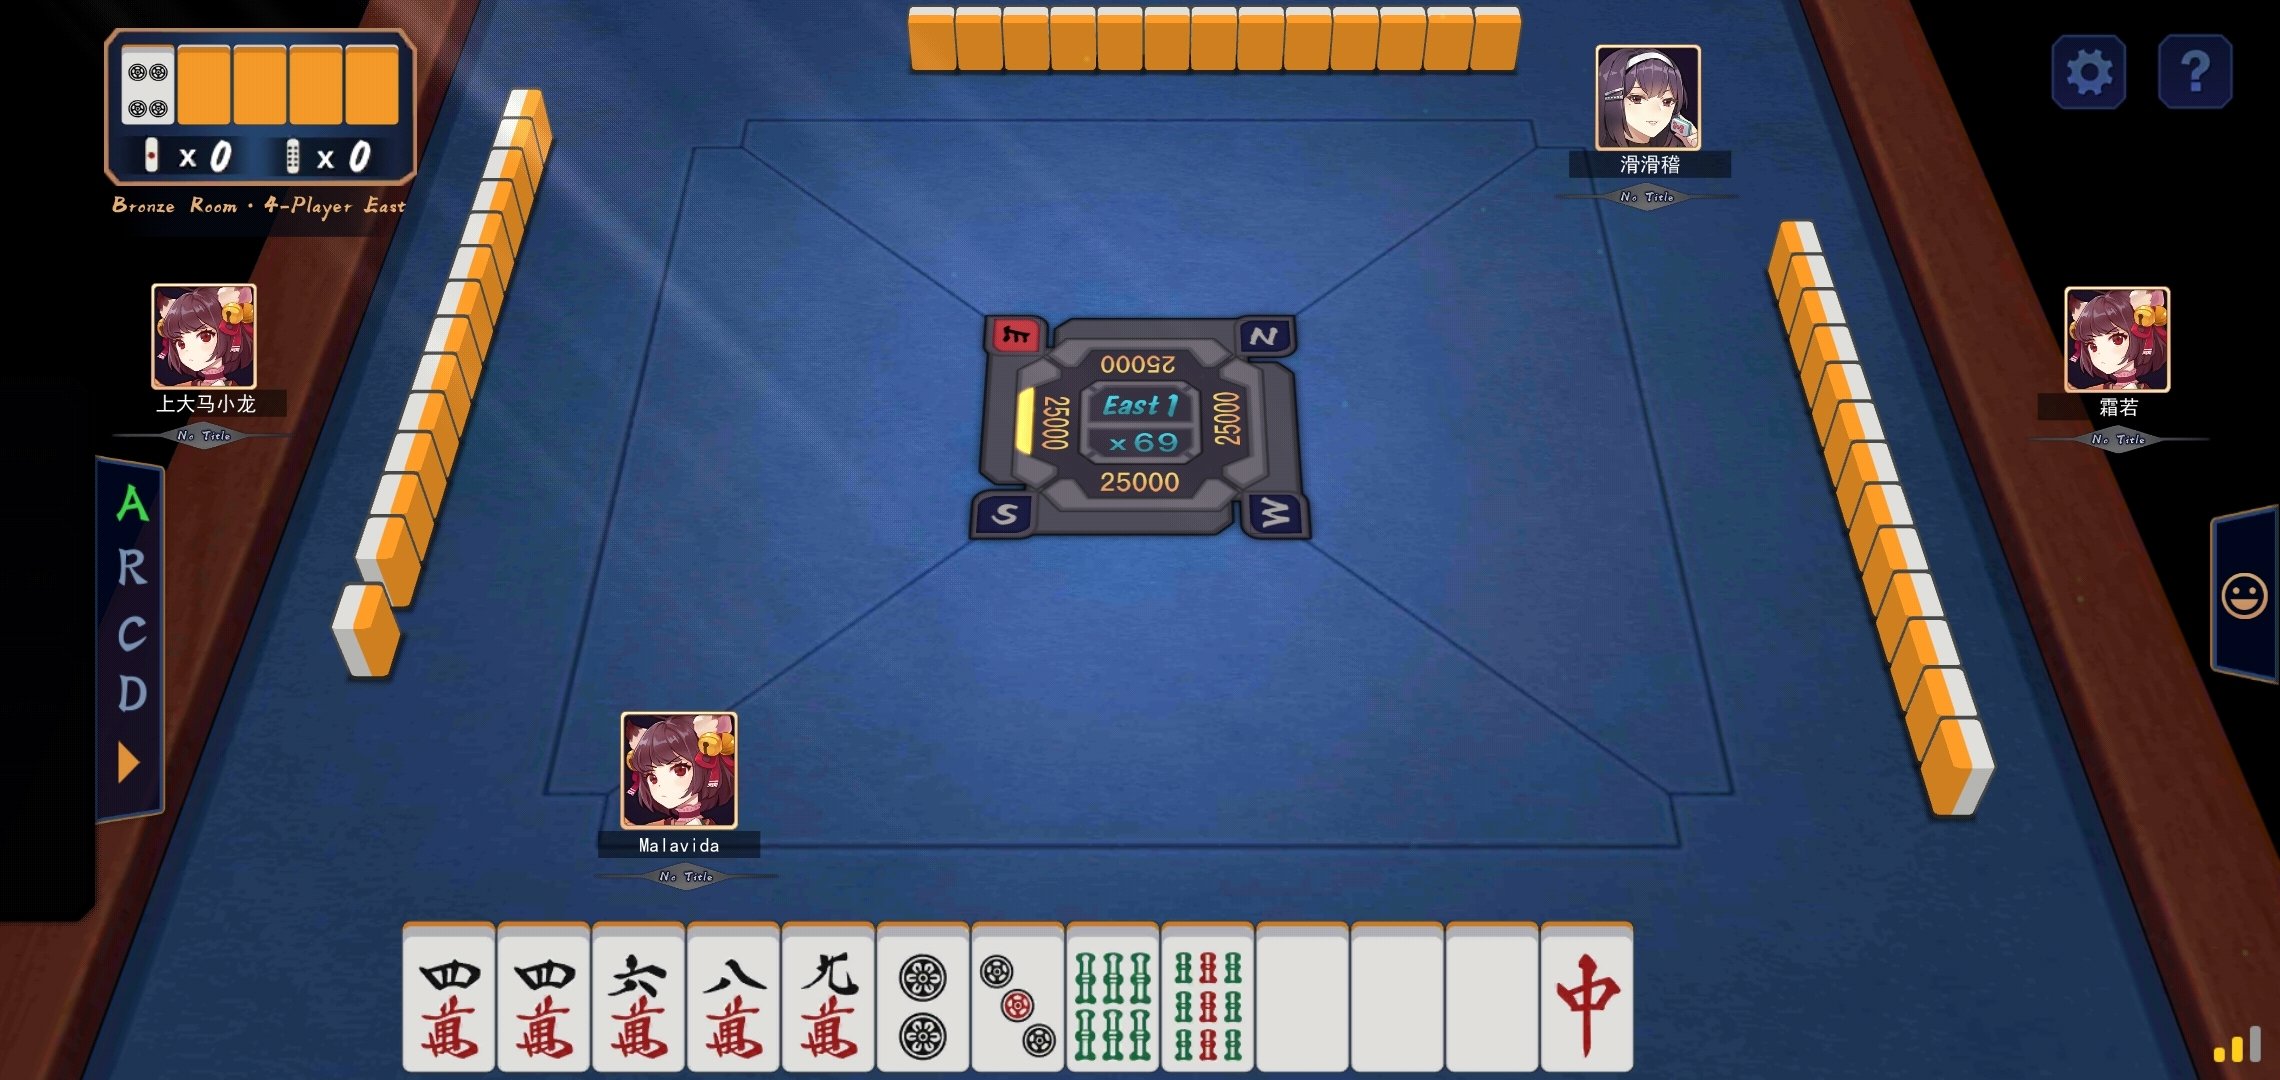 Mahjong soul 🔥 Play online